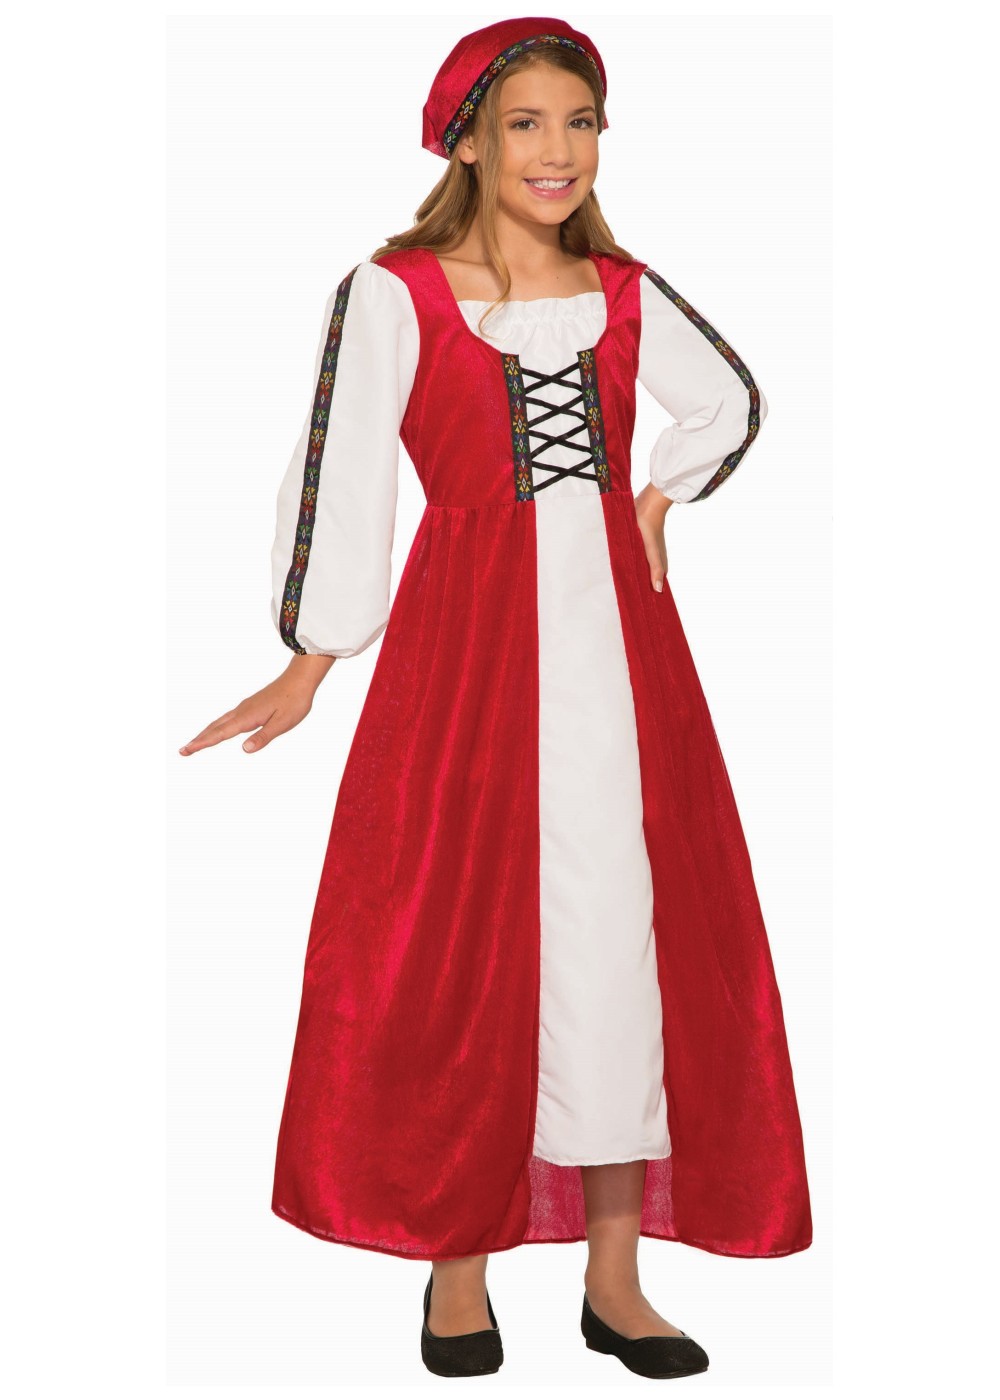 Kids Girls Renaissance Maiden Costume